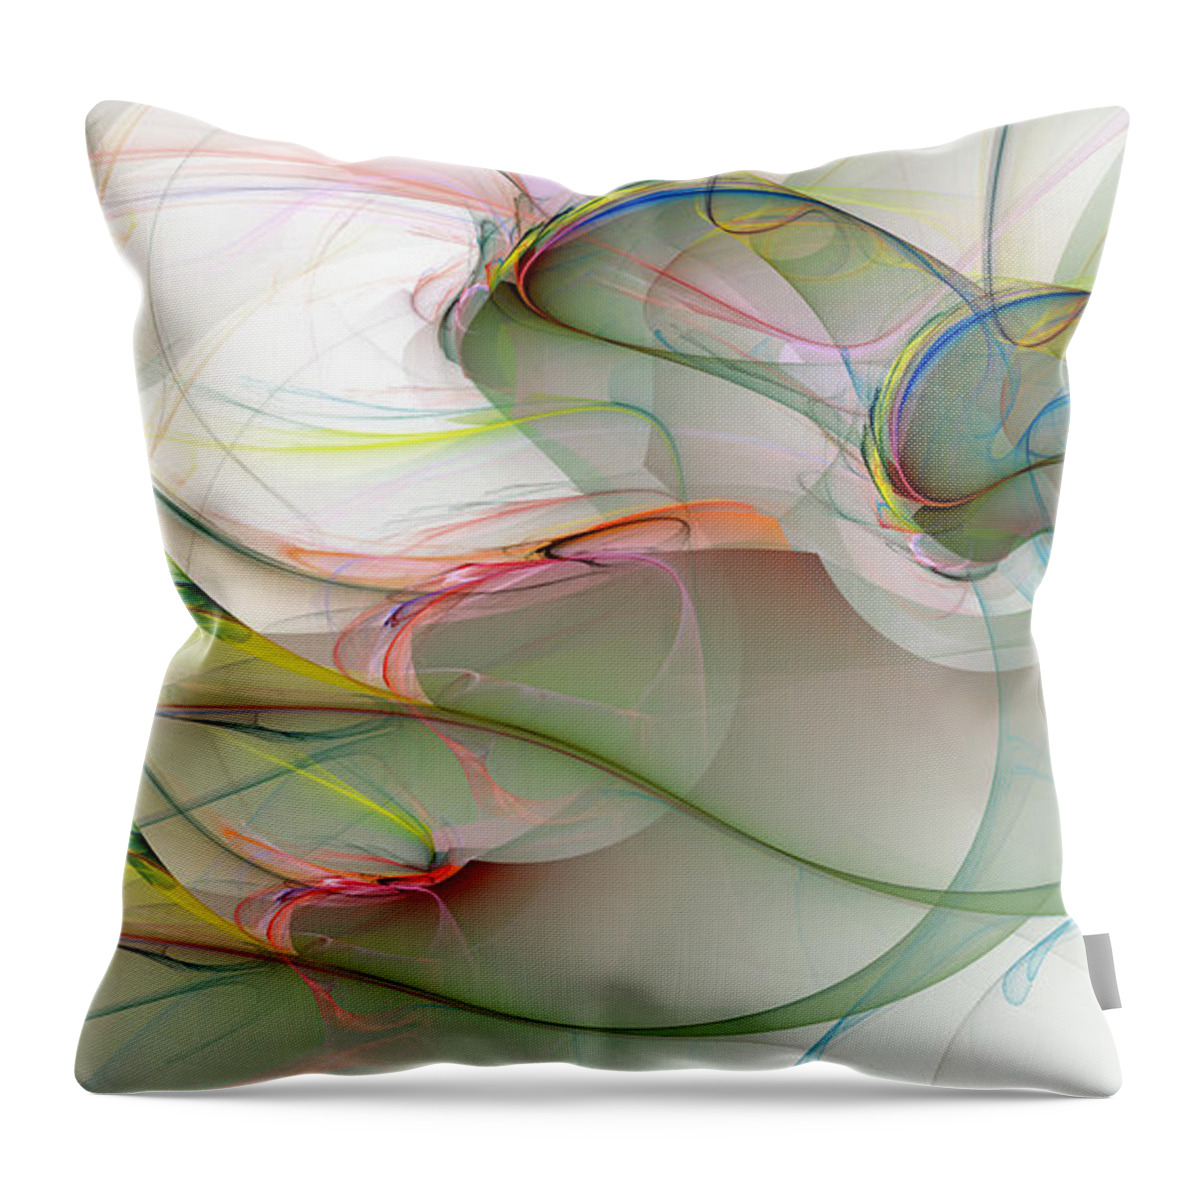 Abstract Art Throw Pillow featuring the digital art 1263 by Lar Matre